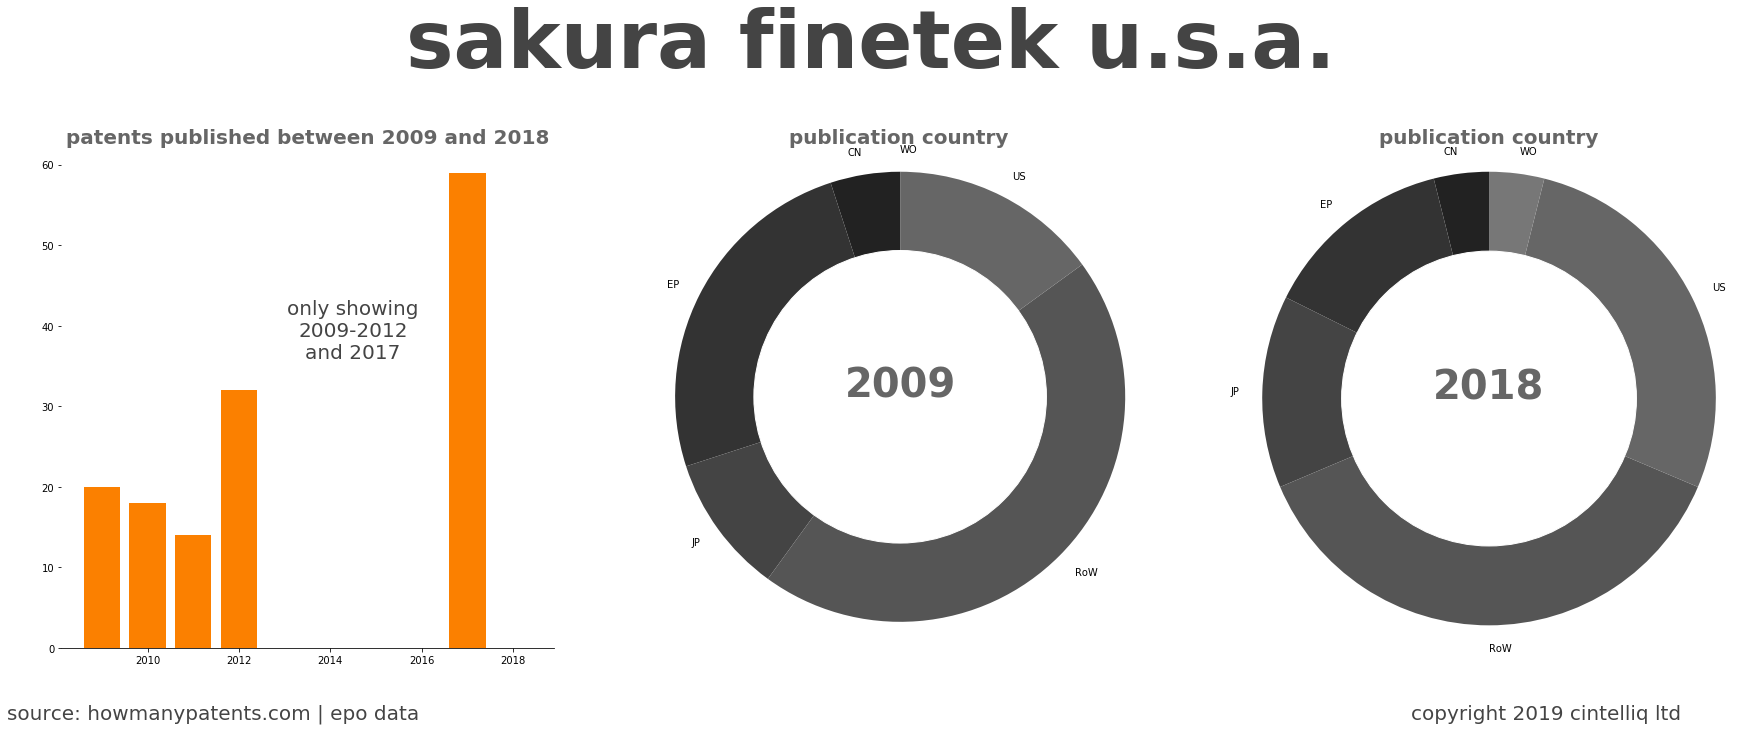 summary of patents for Sakura Finetek U.S.A.